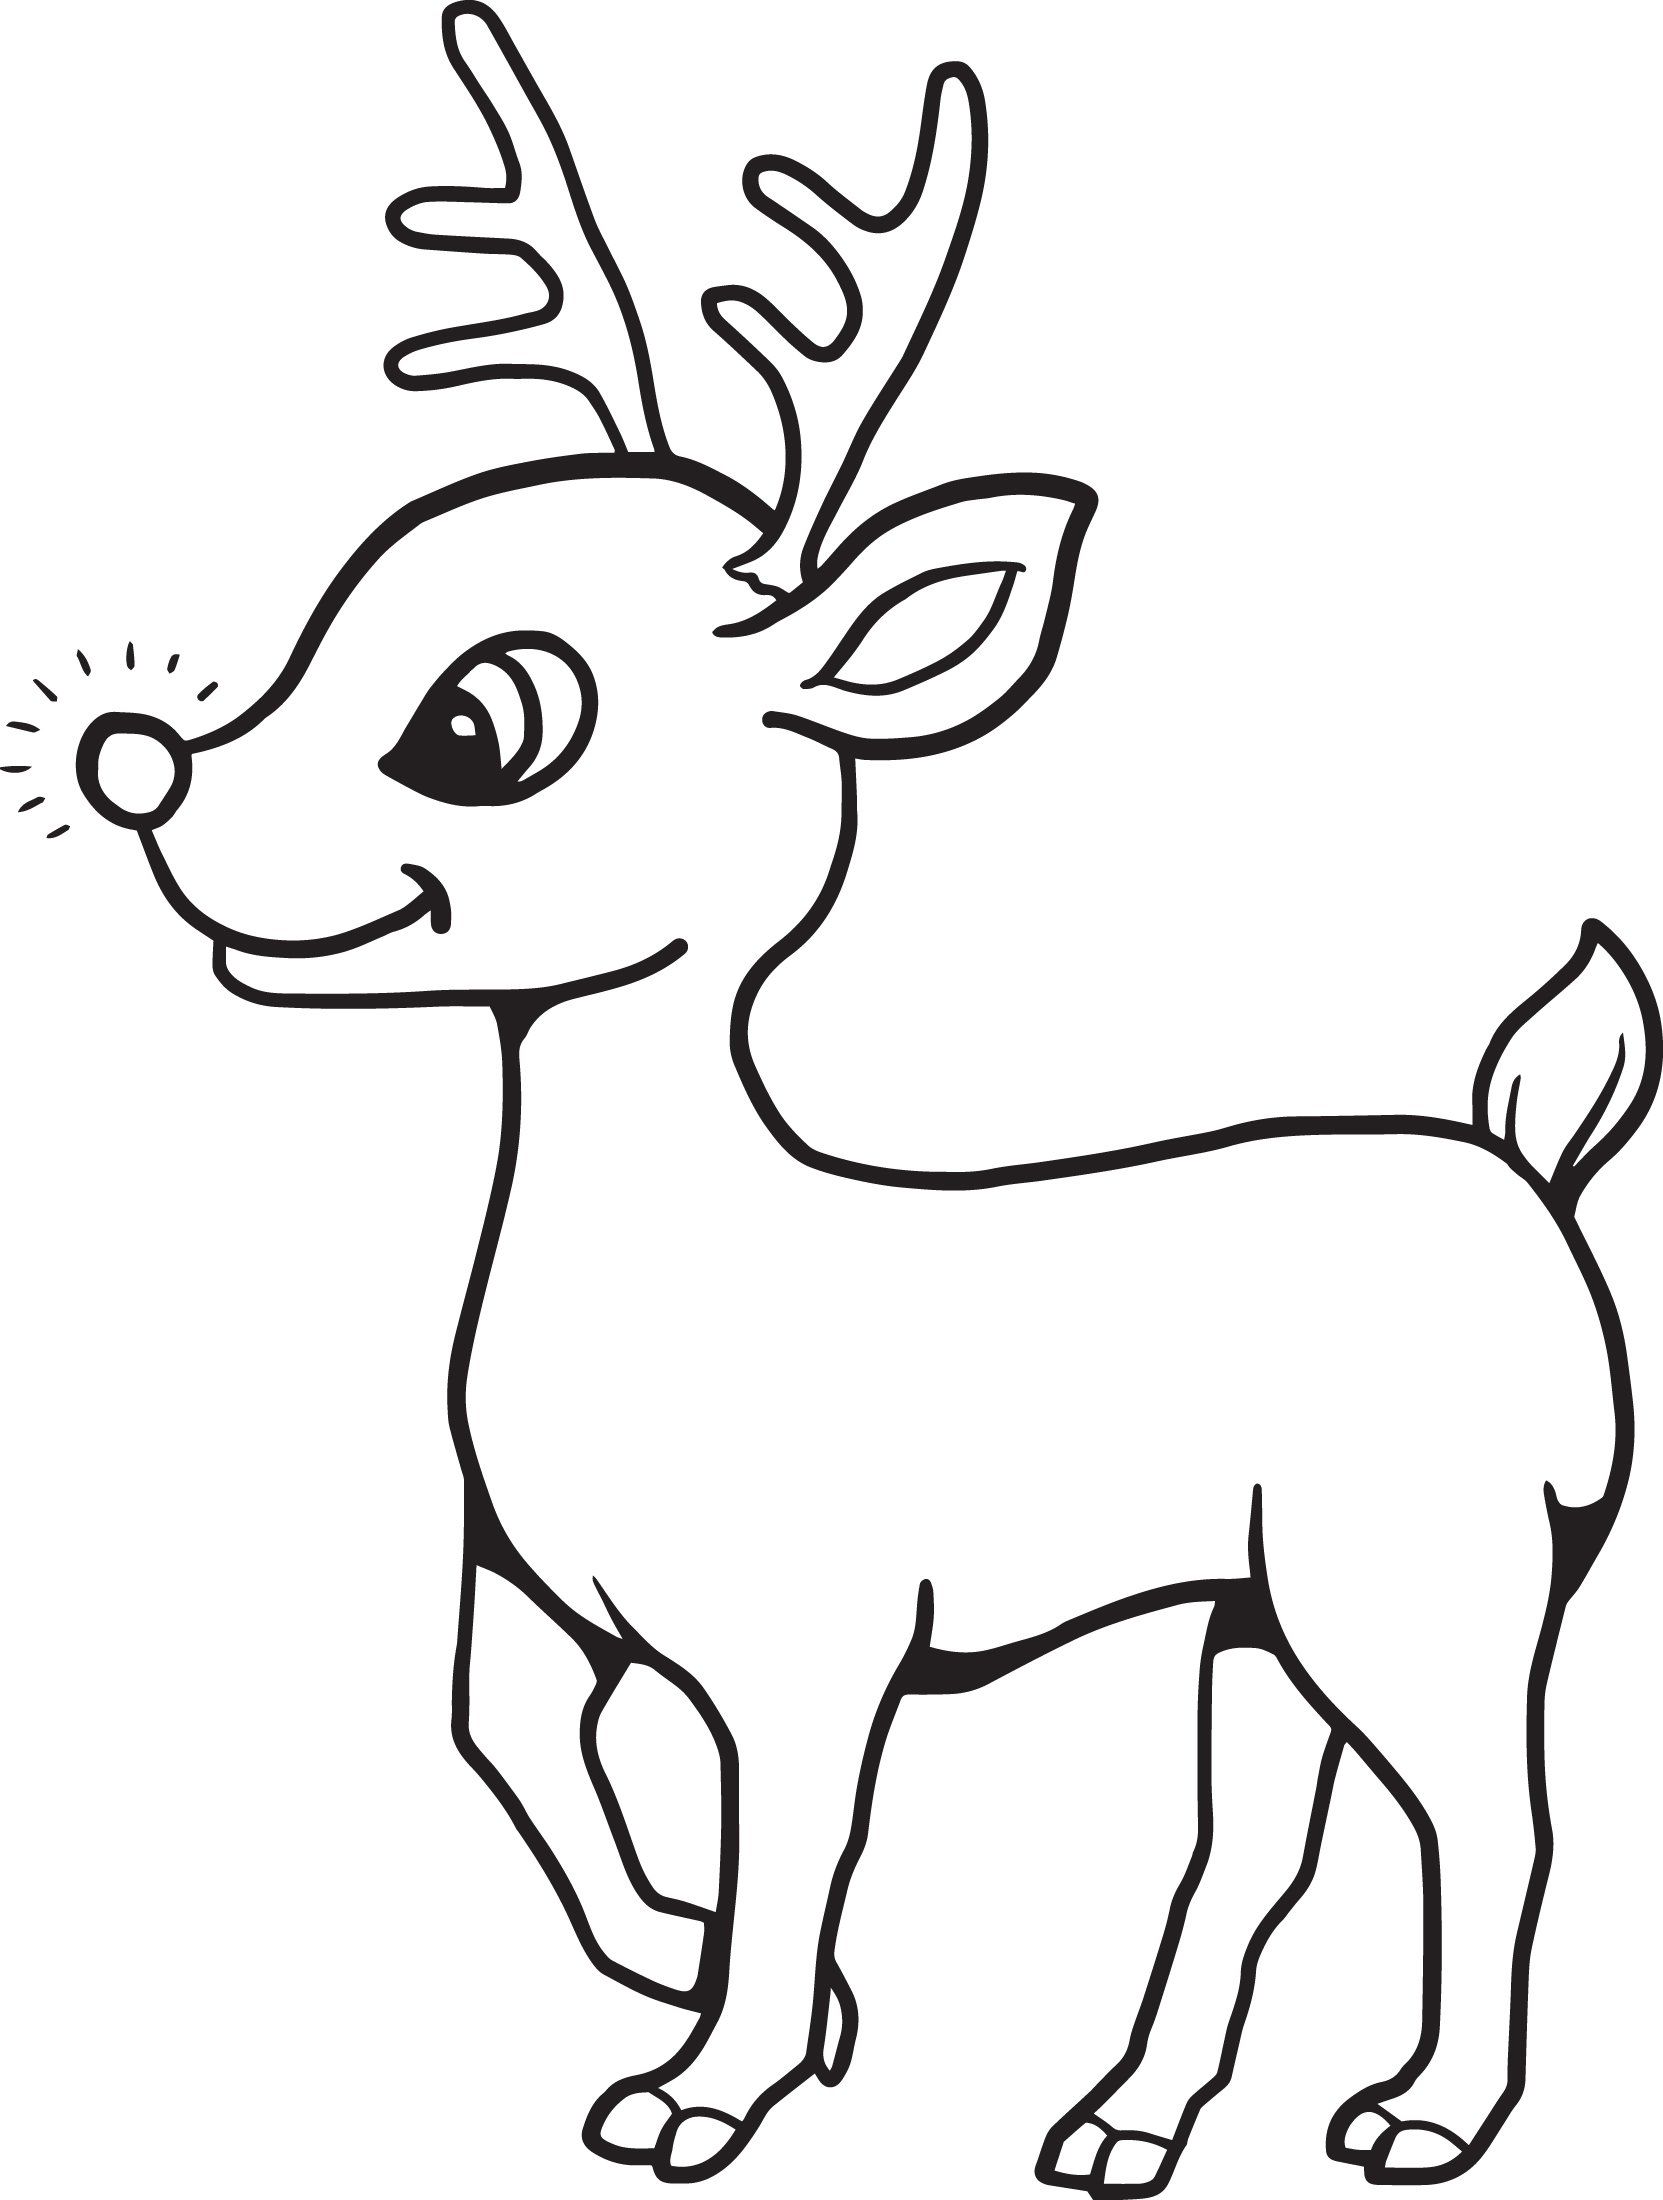 Printable baby reindeer christmas coloring page for kids desenho renas desenho de papai noel para colorir rena de natal